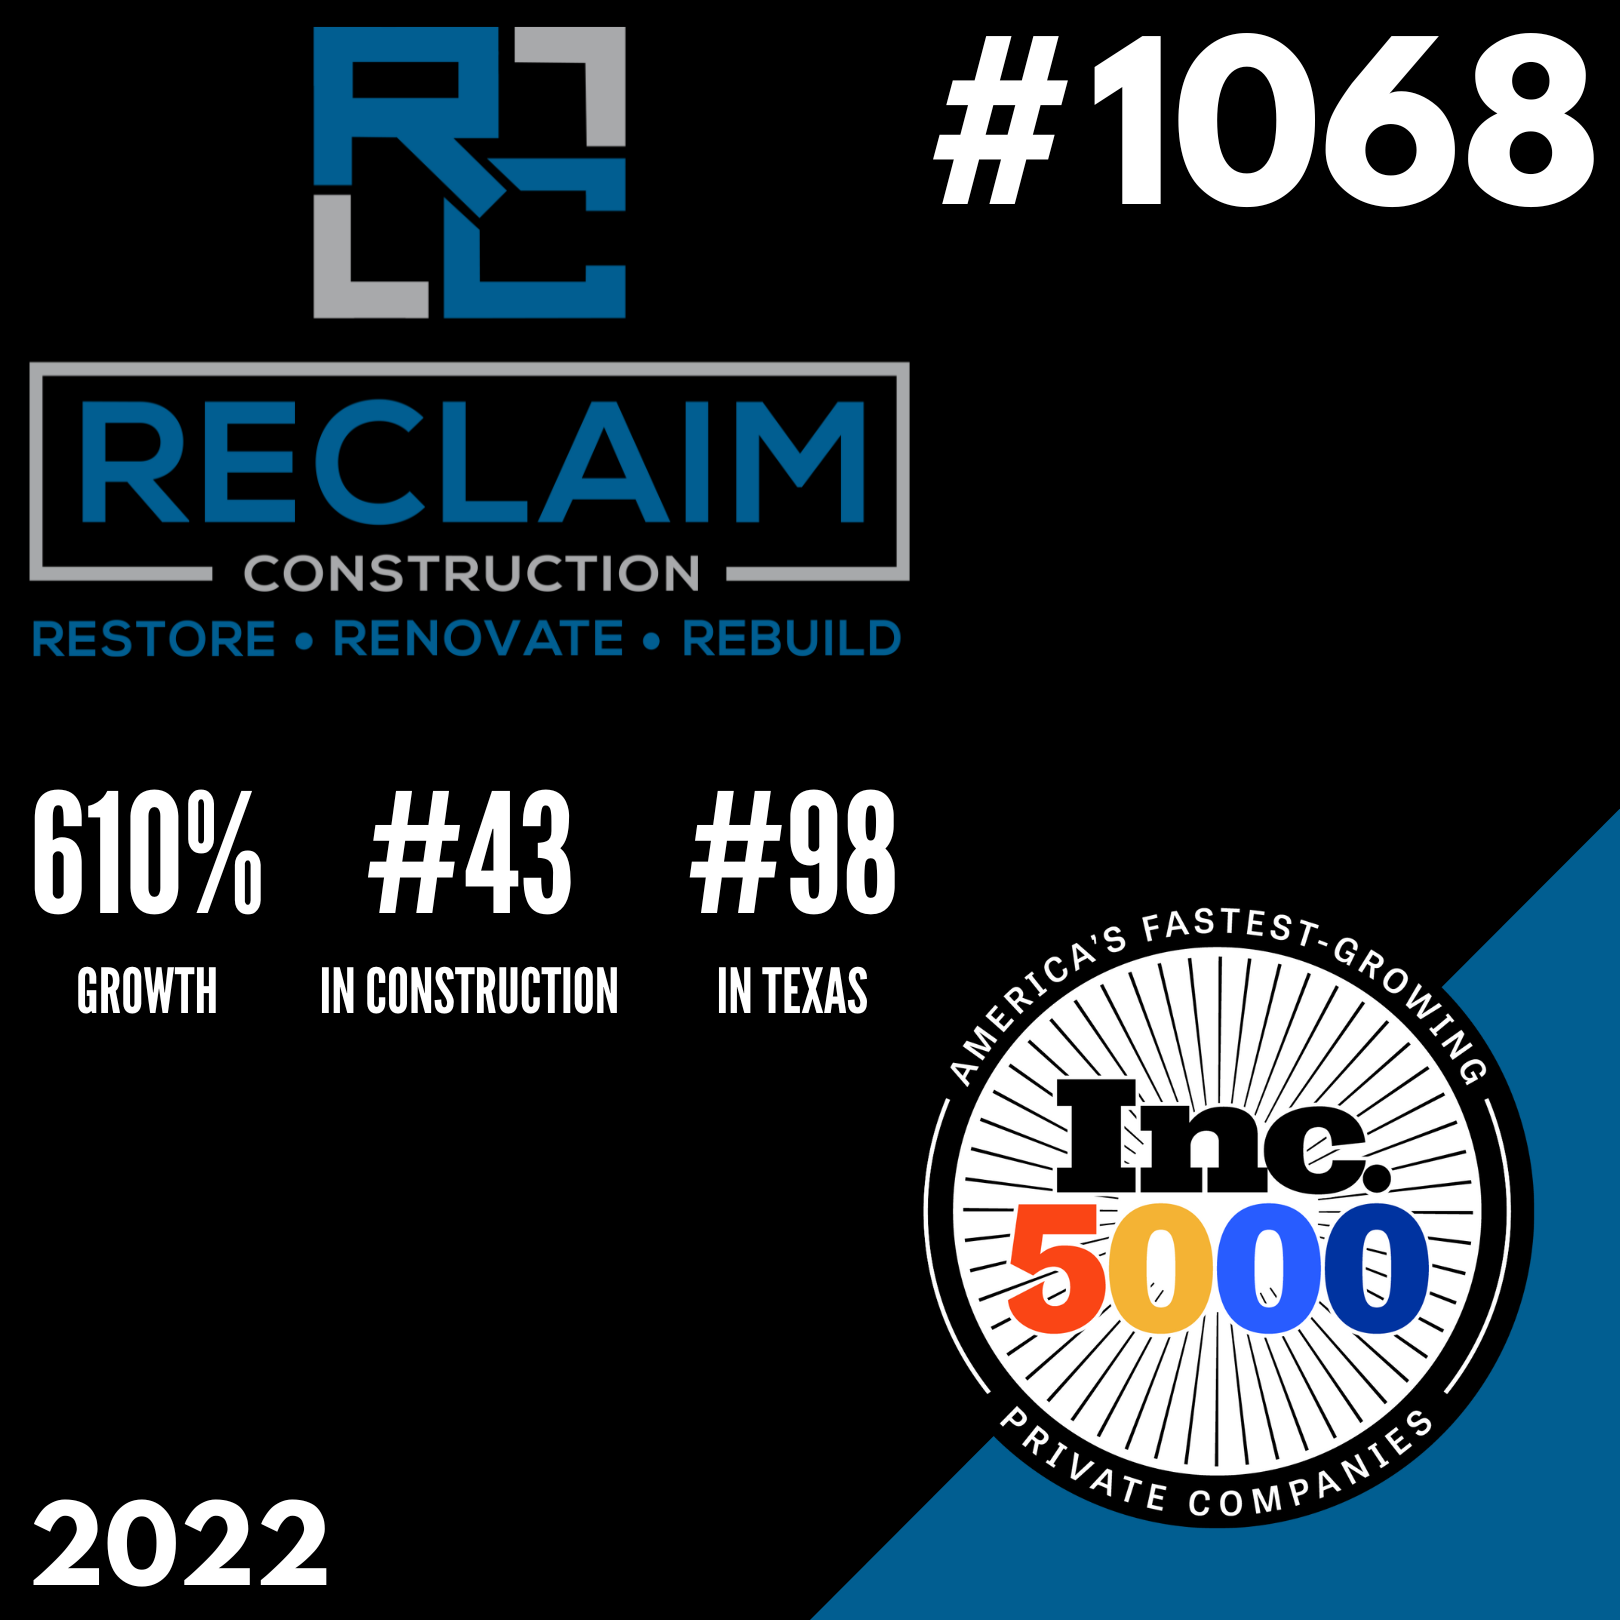 Reclaim Construction Ranks No. 1068 on the 2022 Inc. 5000 Annual List